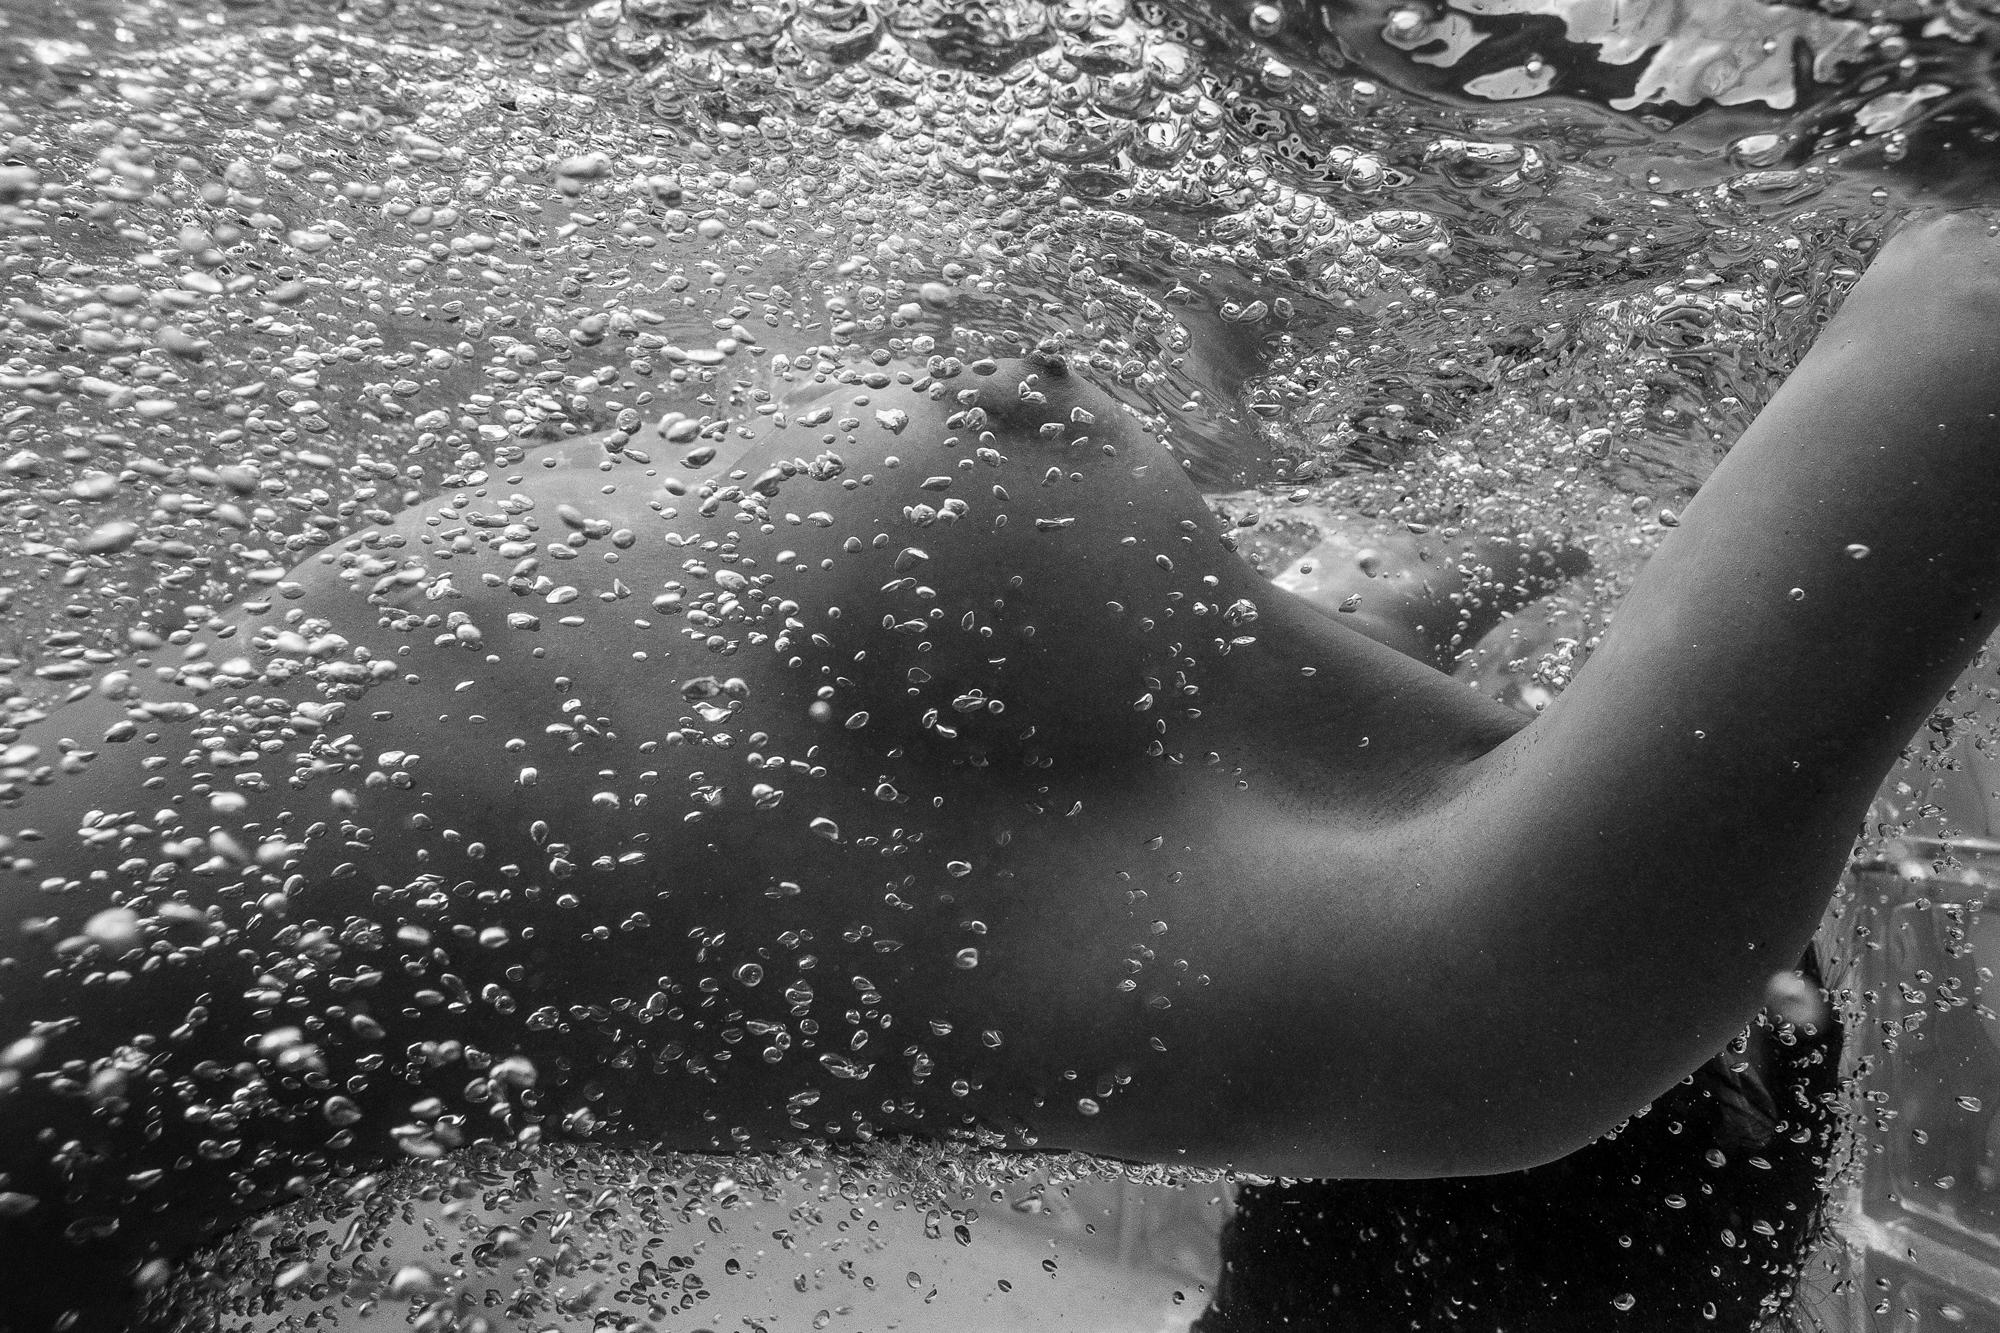 Alex Sher Black and White Photograph - Bubbles - underwater nude b&w photograph - archival pigment print 35 x 52"